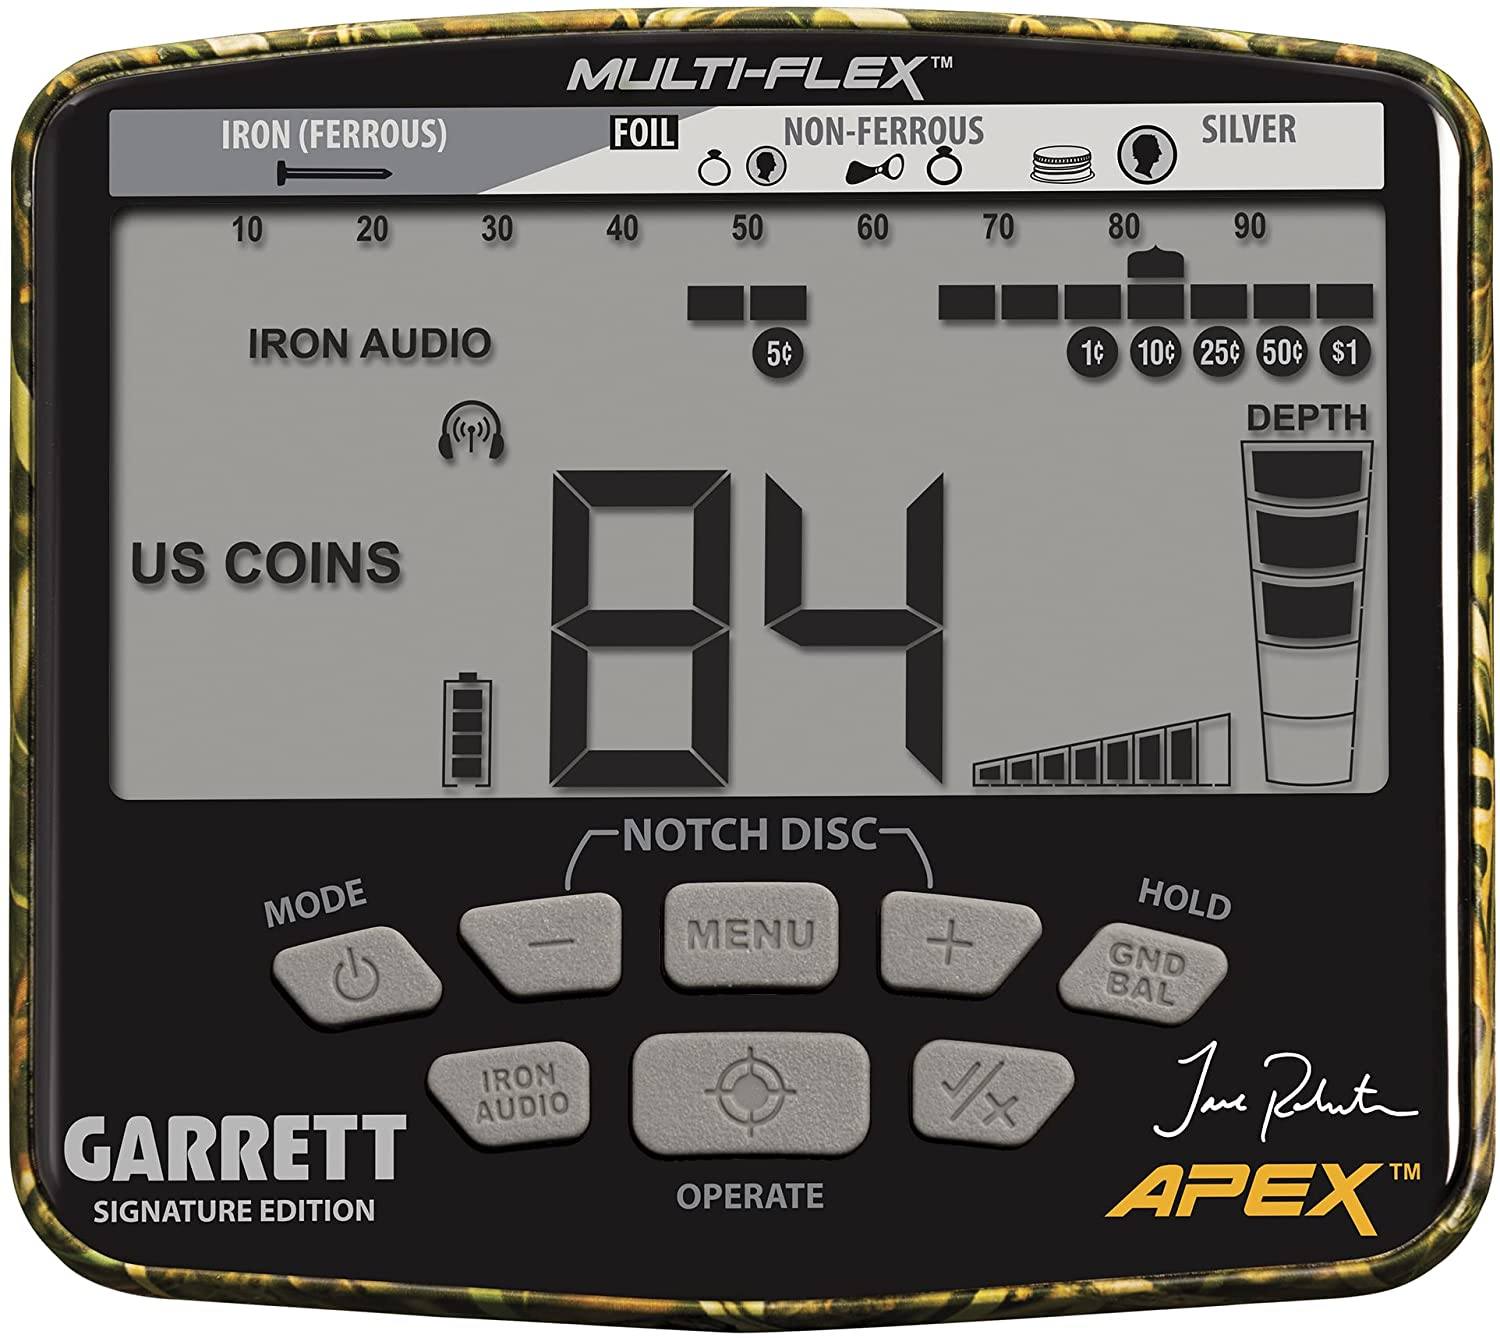 Garrett Jase Robertson Signature Edition APEX Metal Detector